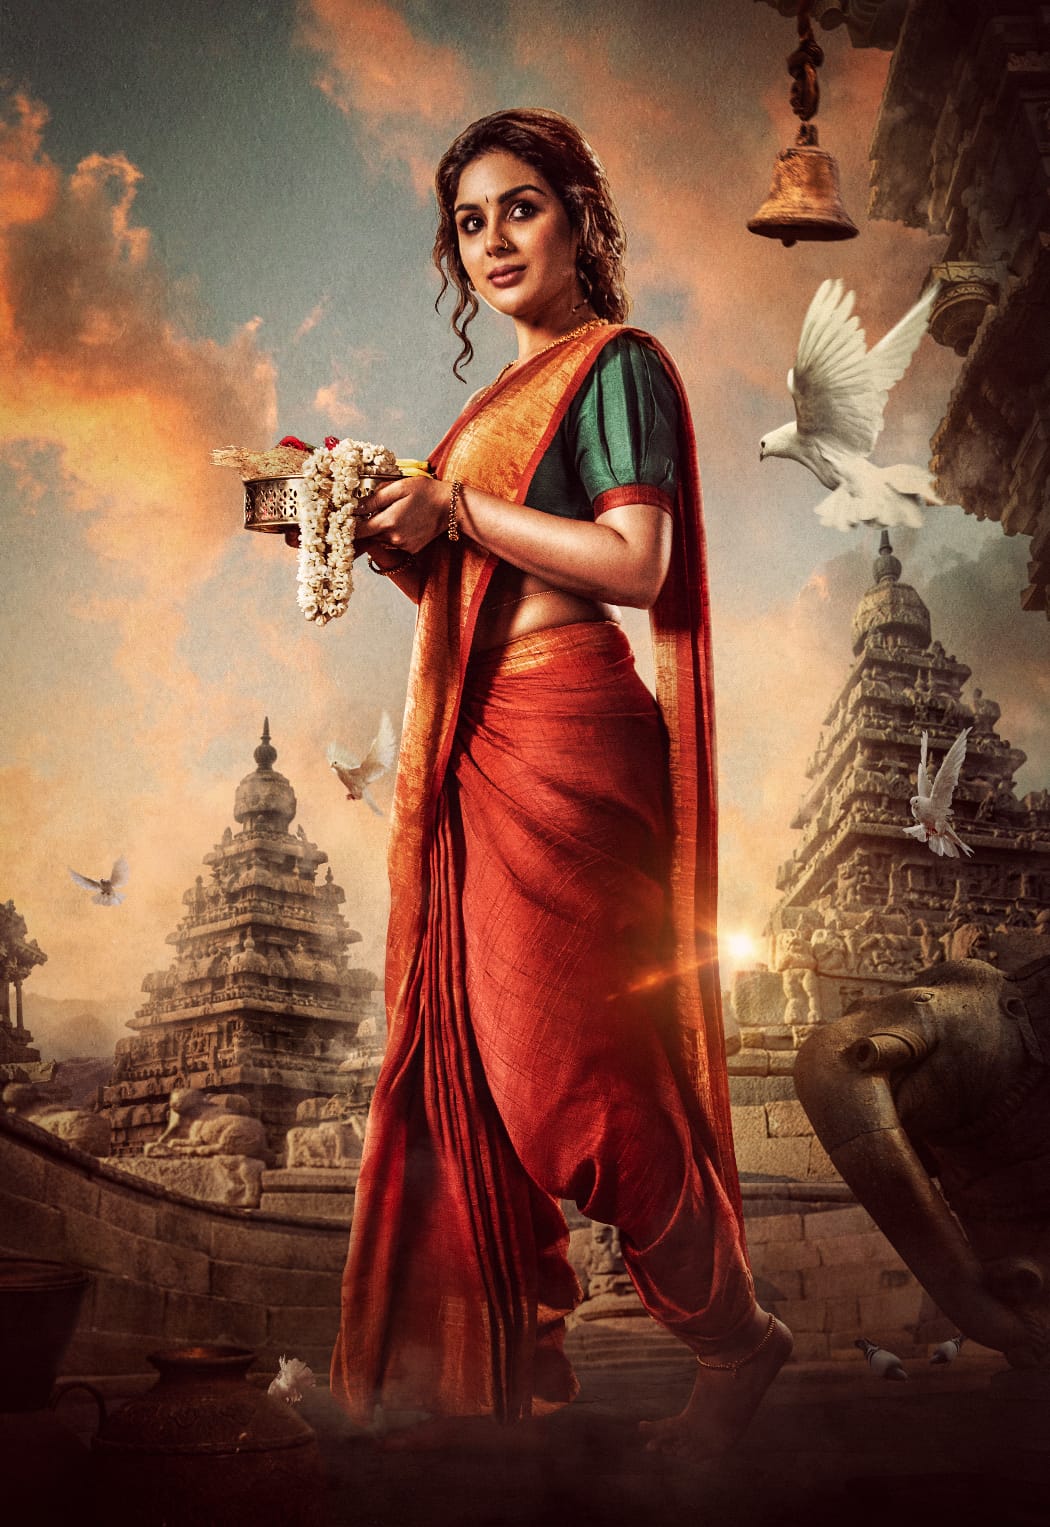 Samyuktha as Nyshadha in Nandamuri Kalyan Ram's periodical spy thriller 'Devil', first look poster unveiled